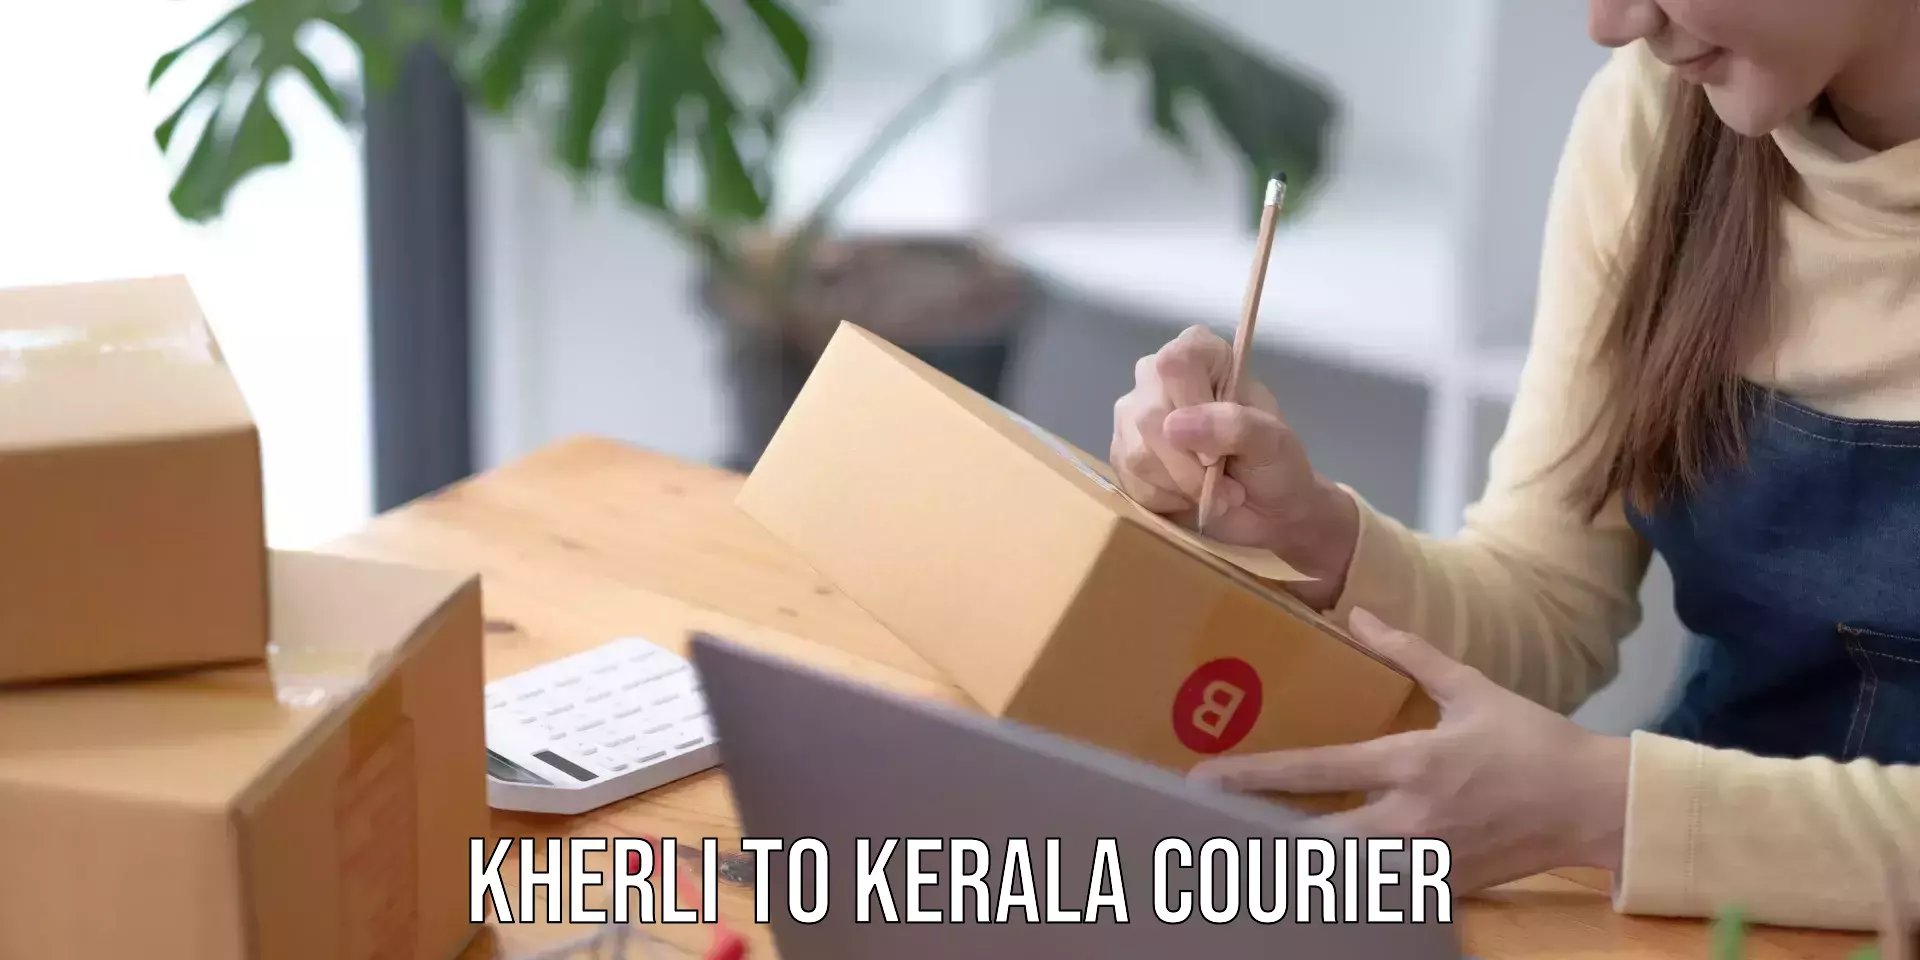 Courier service innovation Kherli to Kerala